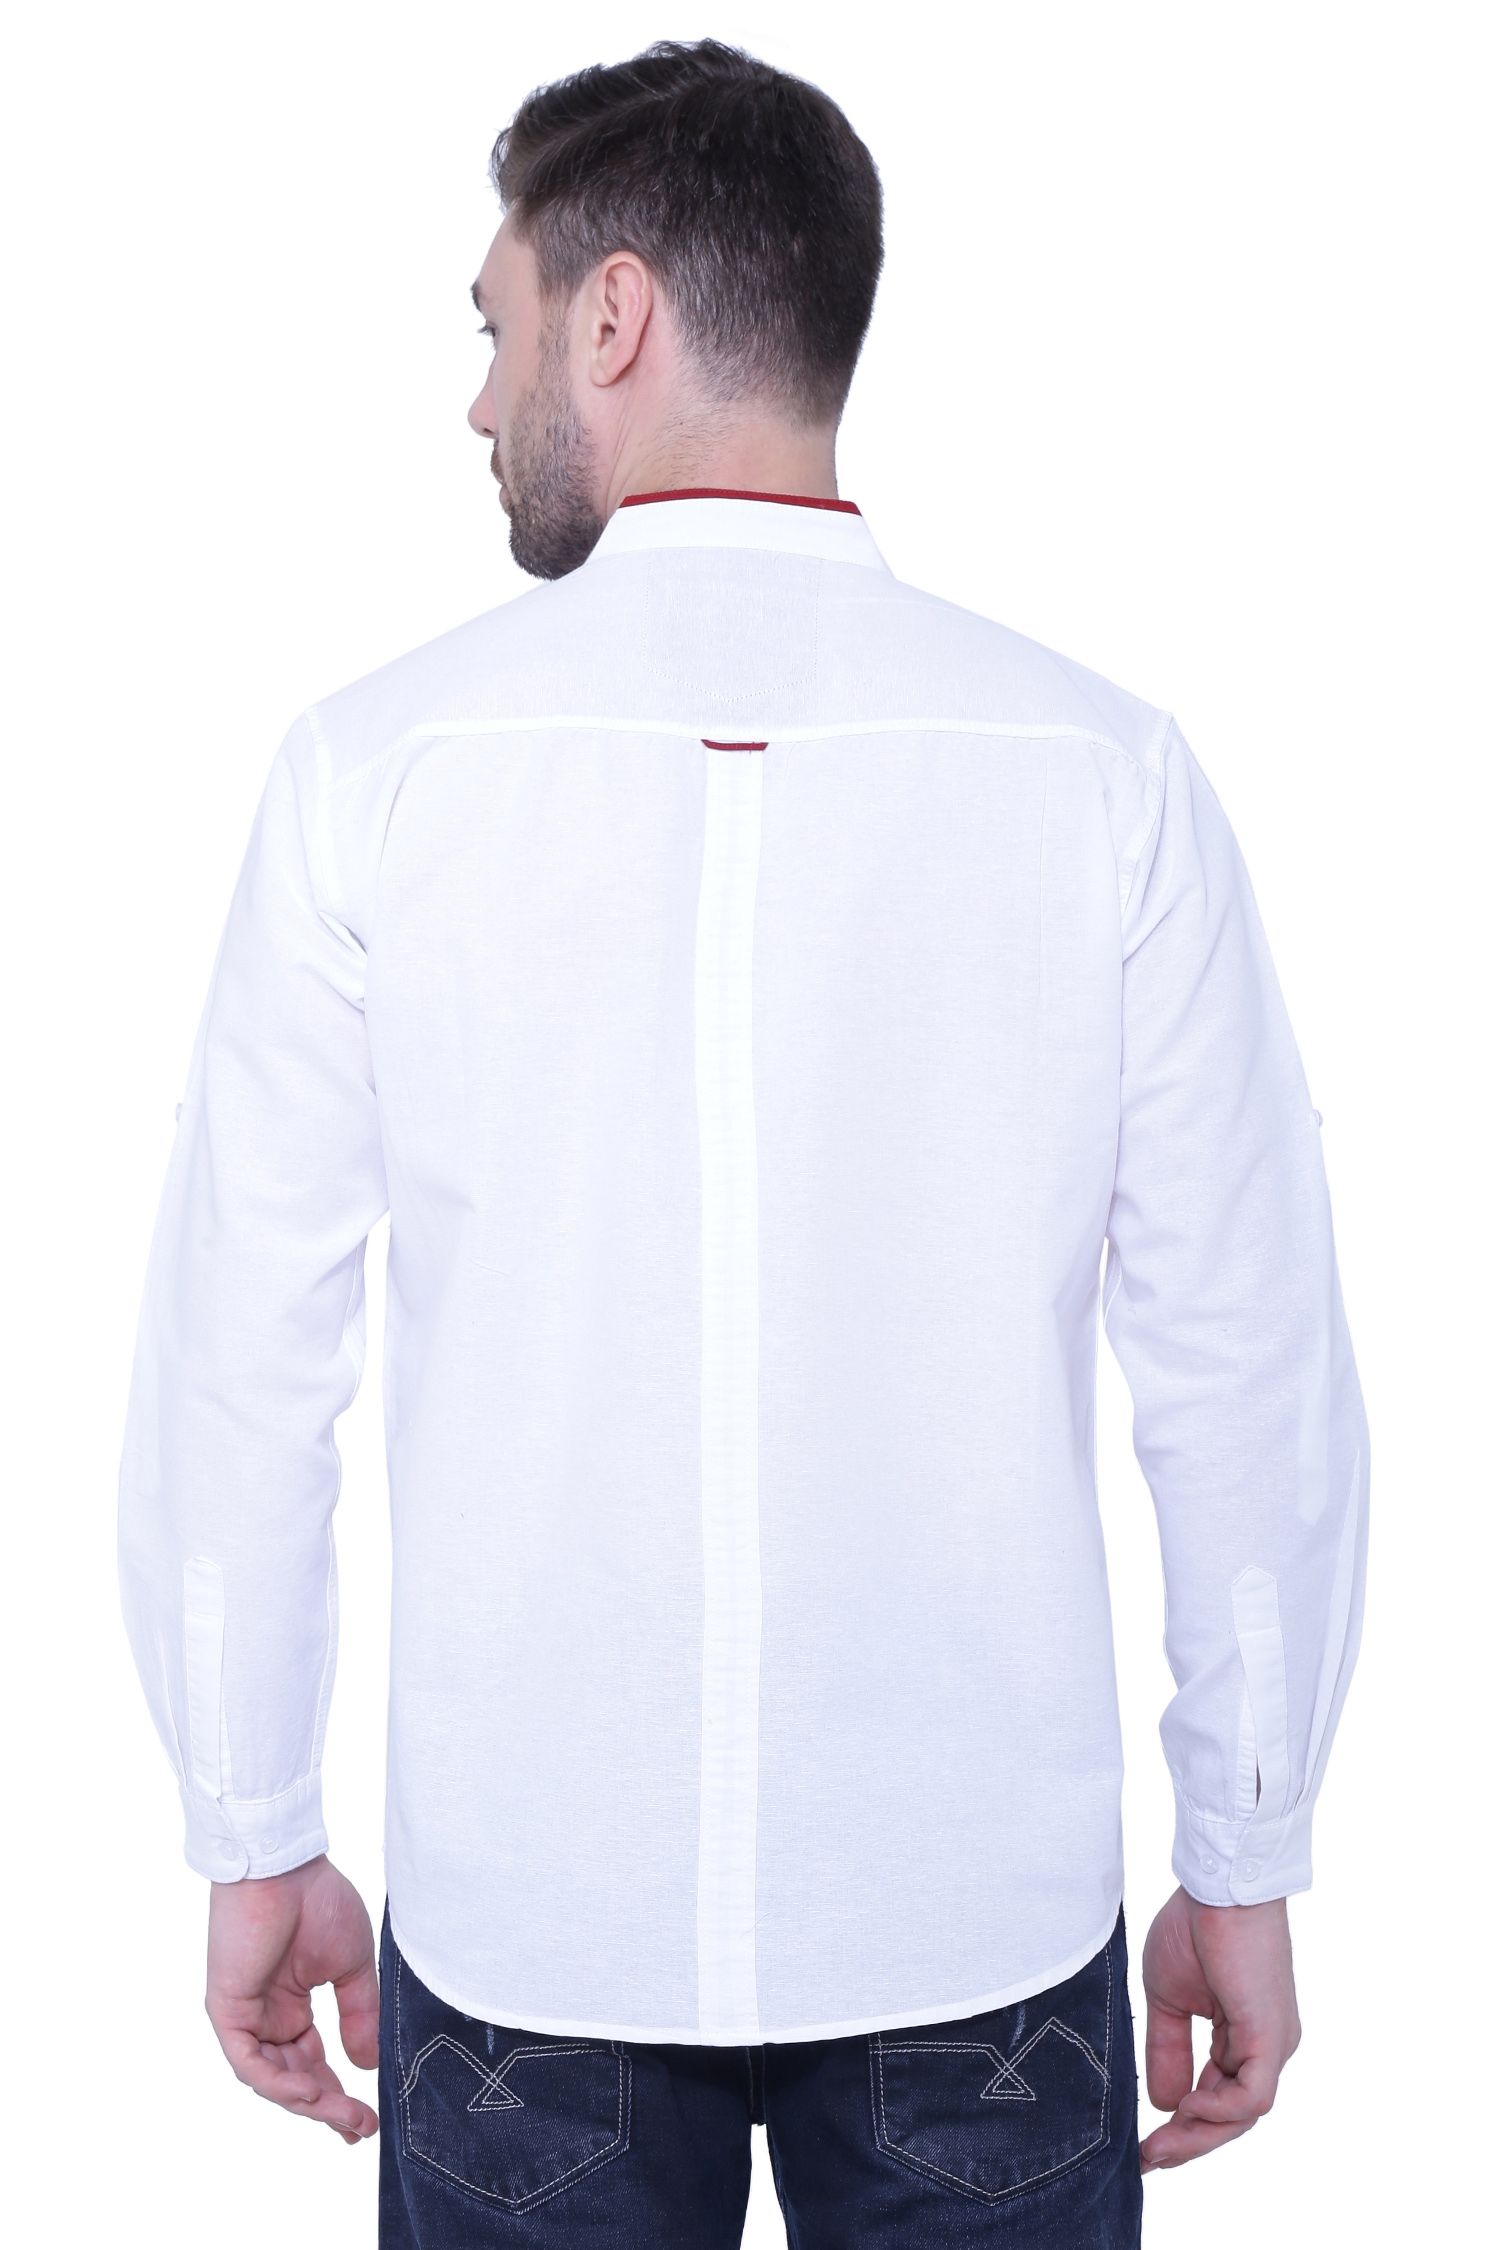 Kuons Avenue | Kuons Avenue Men's Linen Cotton Casual Shirt- KACLFS1179A 2